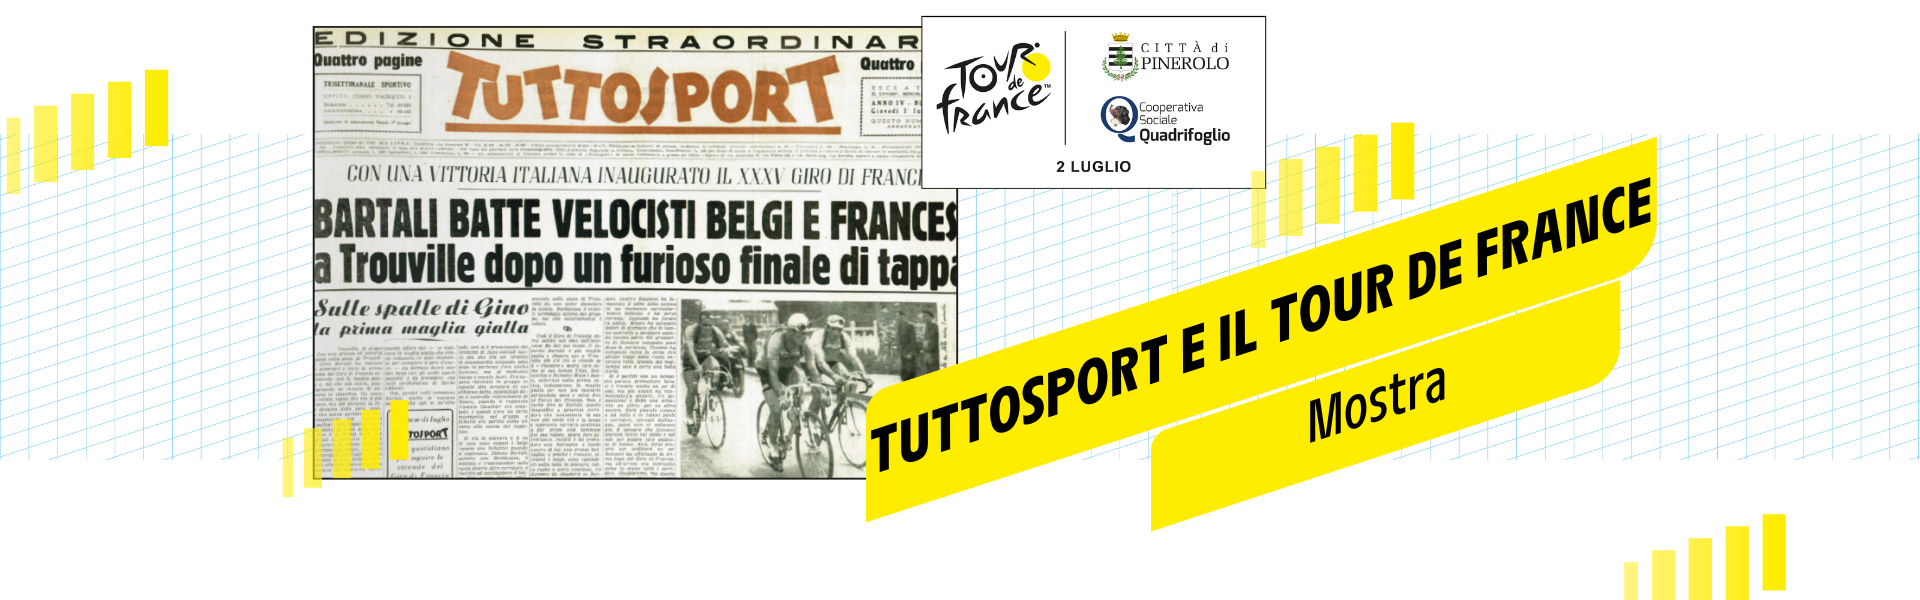 Mostra Tuttosport e il Tour de France